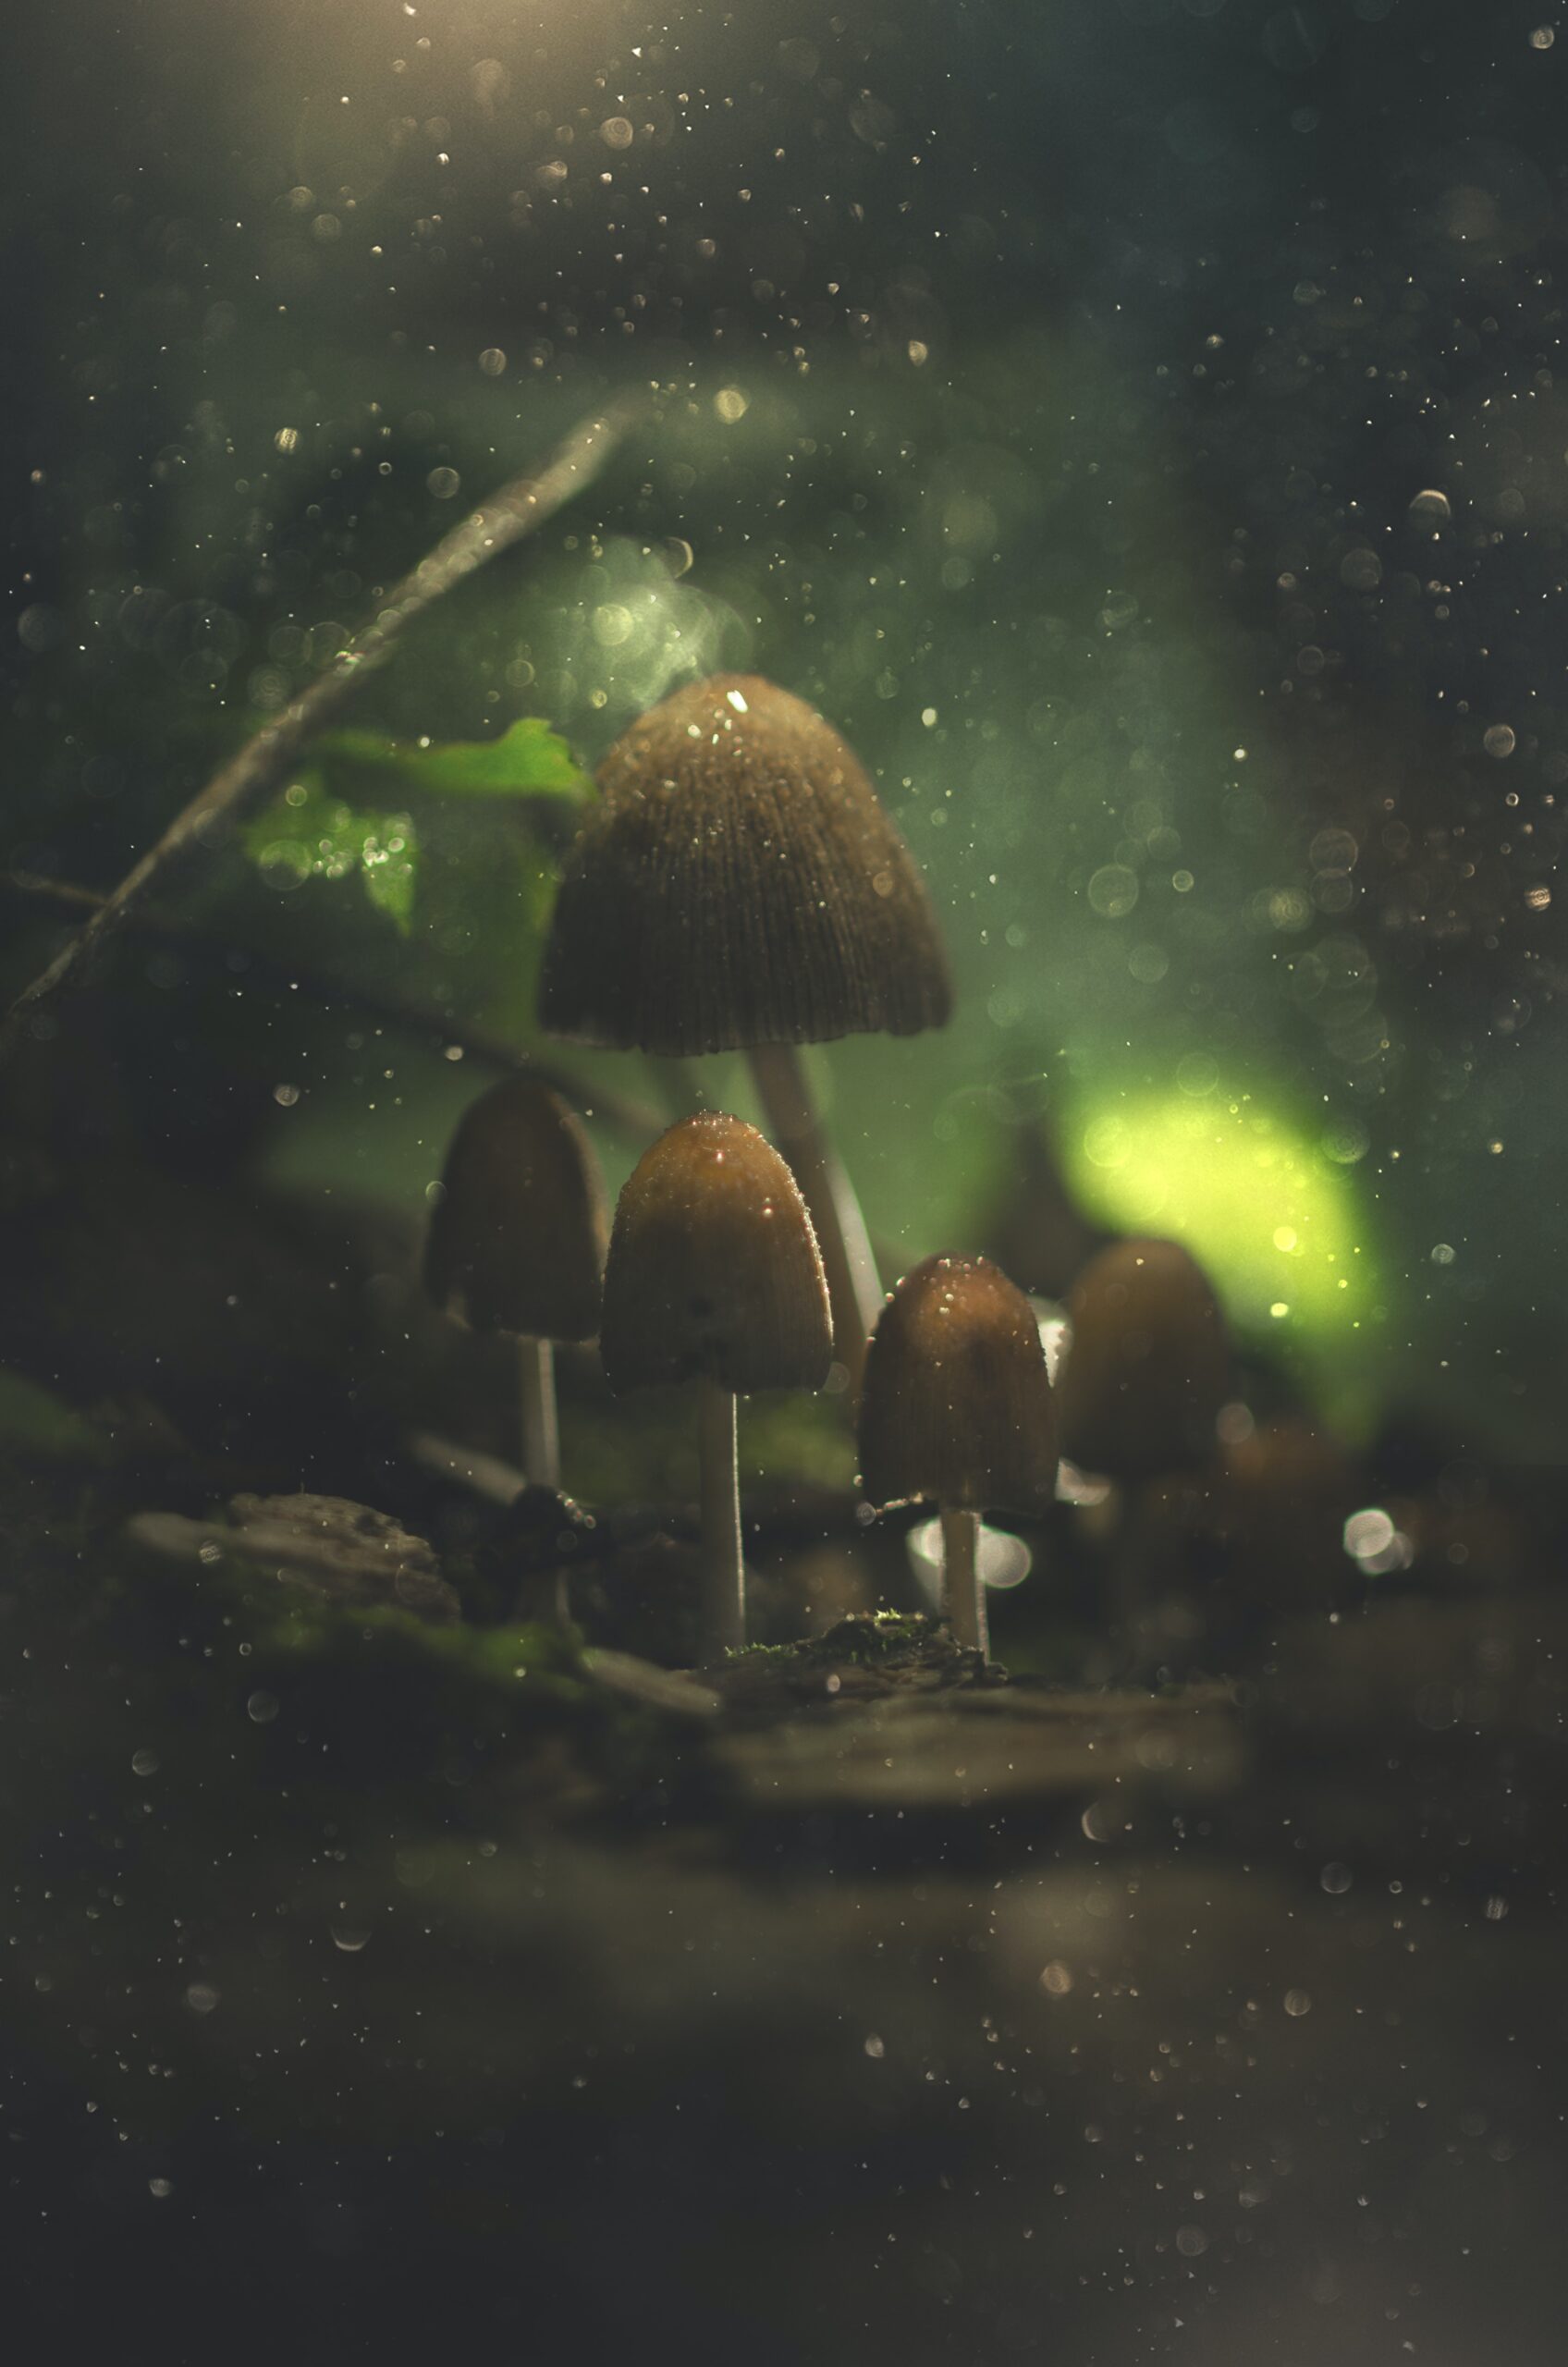 Why Certain Mushroom Species Prefer Dark Environments